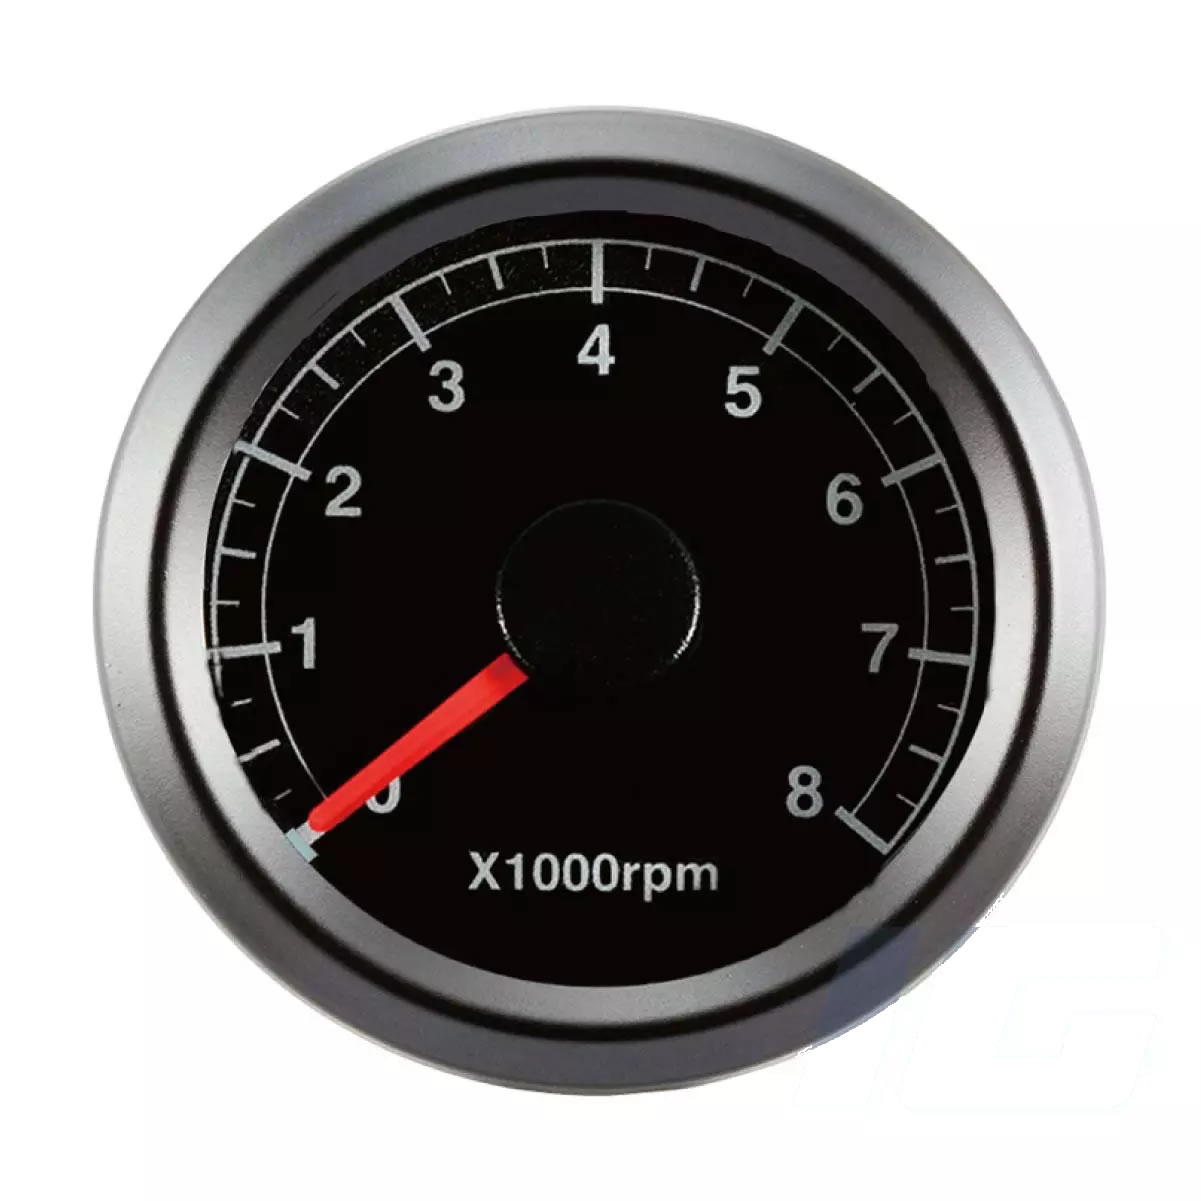 Black Face Red Neddle Universal Aftermarket Tachometer for Motorcycle Gauge